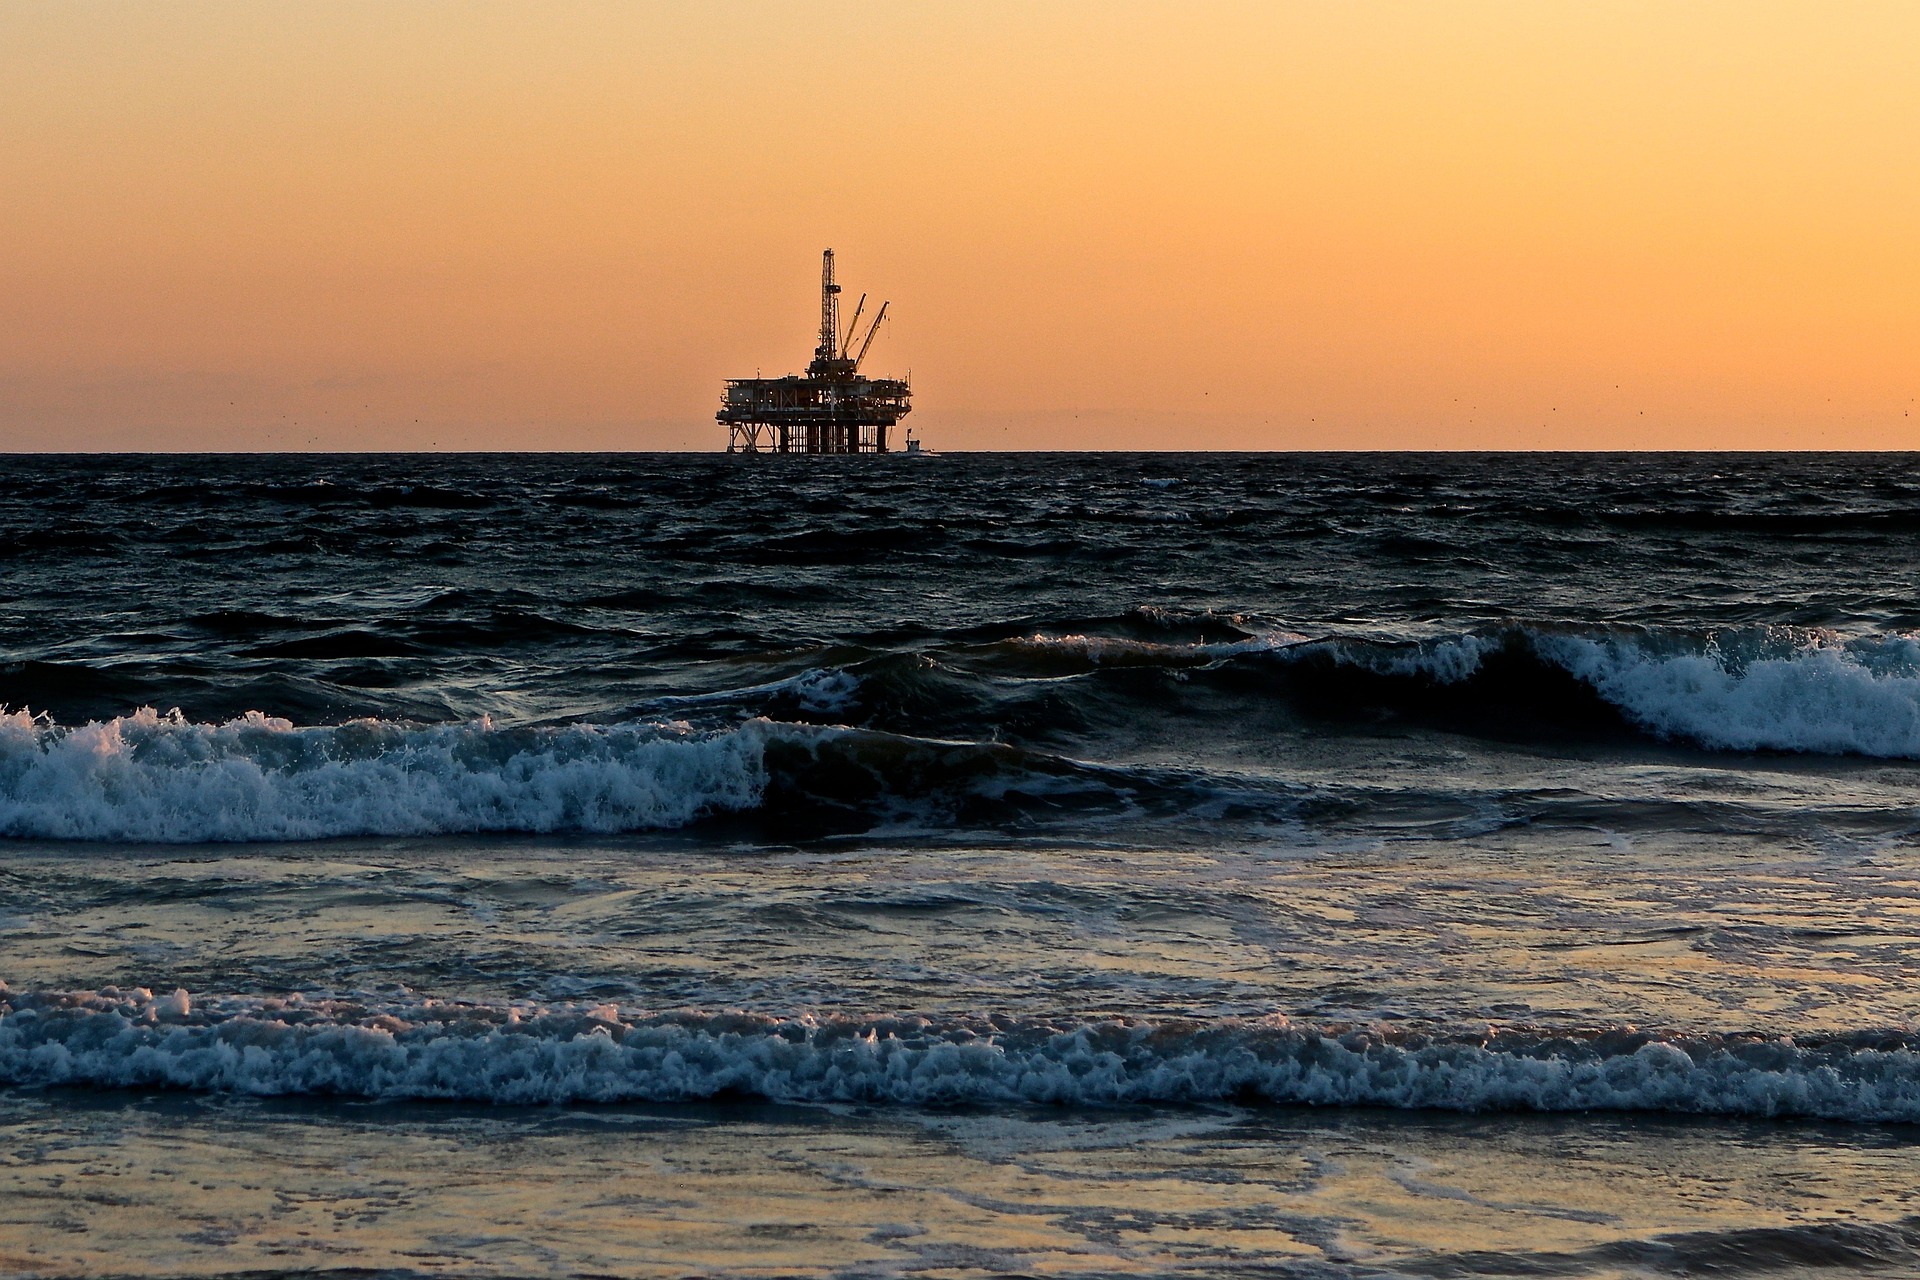 Öl-Plattform bei Sonnenuntergang